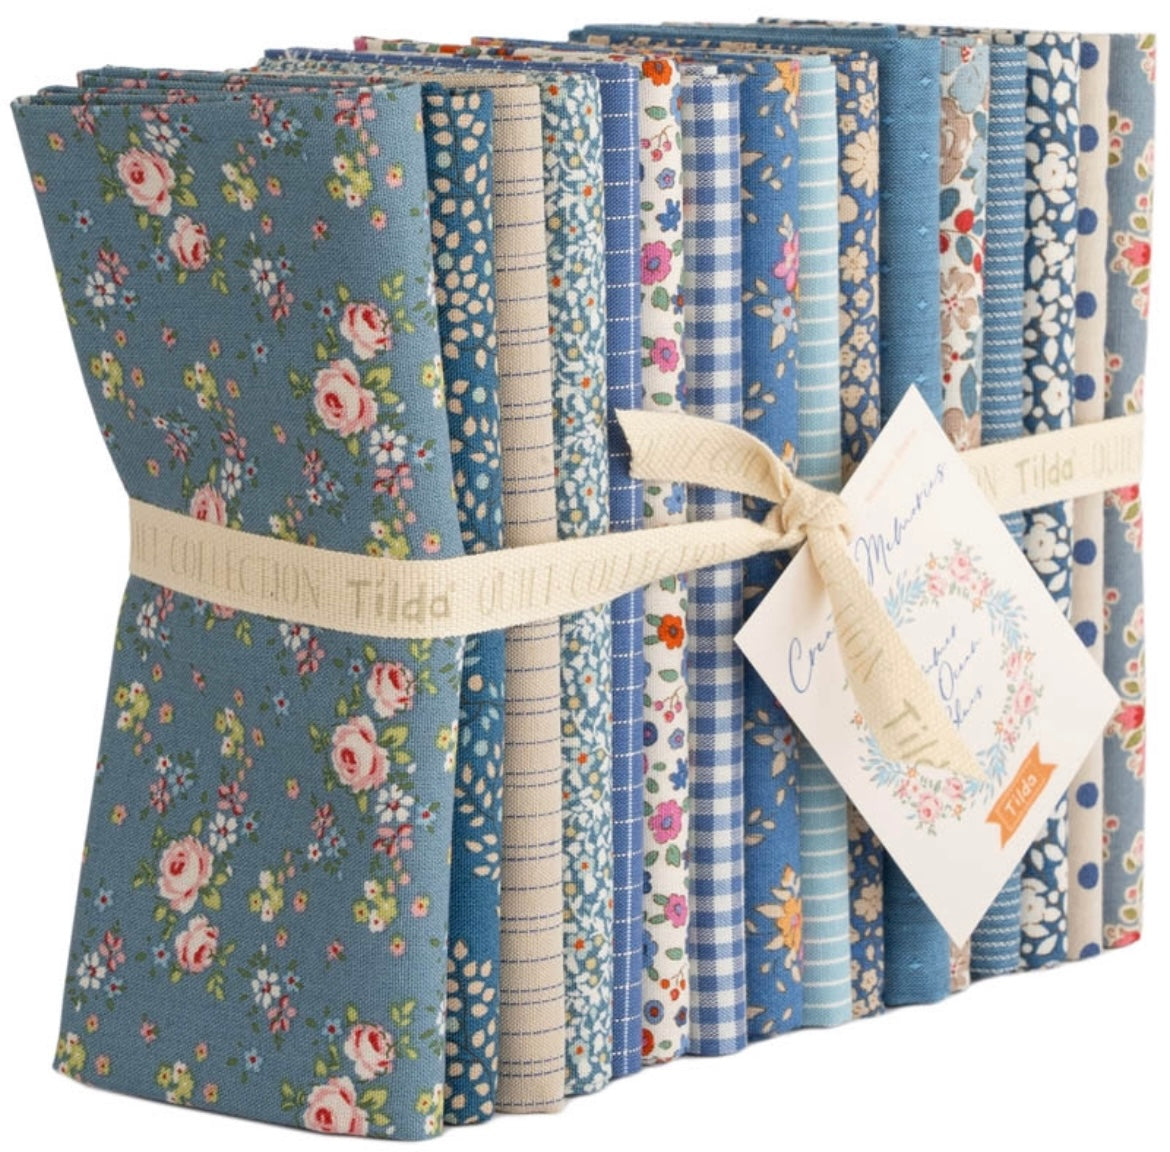 Preorder: Seasonal Fat Quarter Bundles - 16 fabrics - Creating Memories Collection by Tilda Fabrics